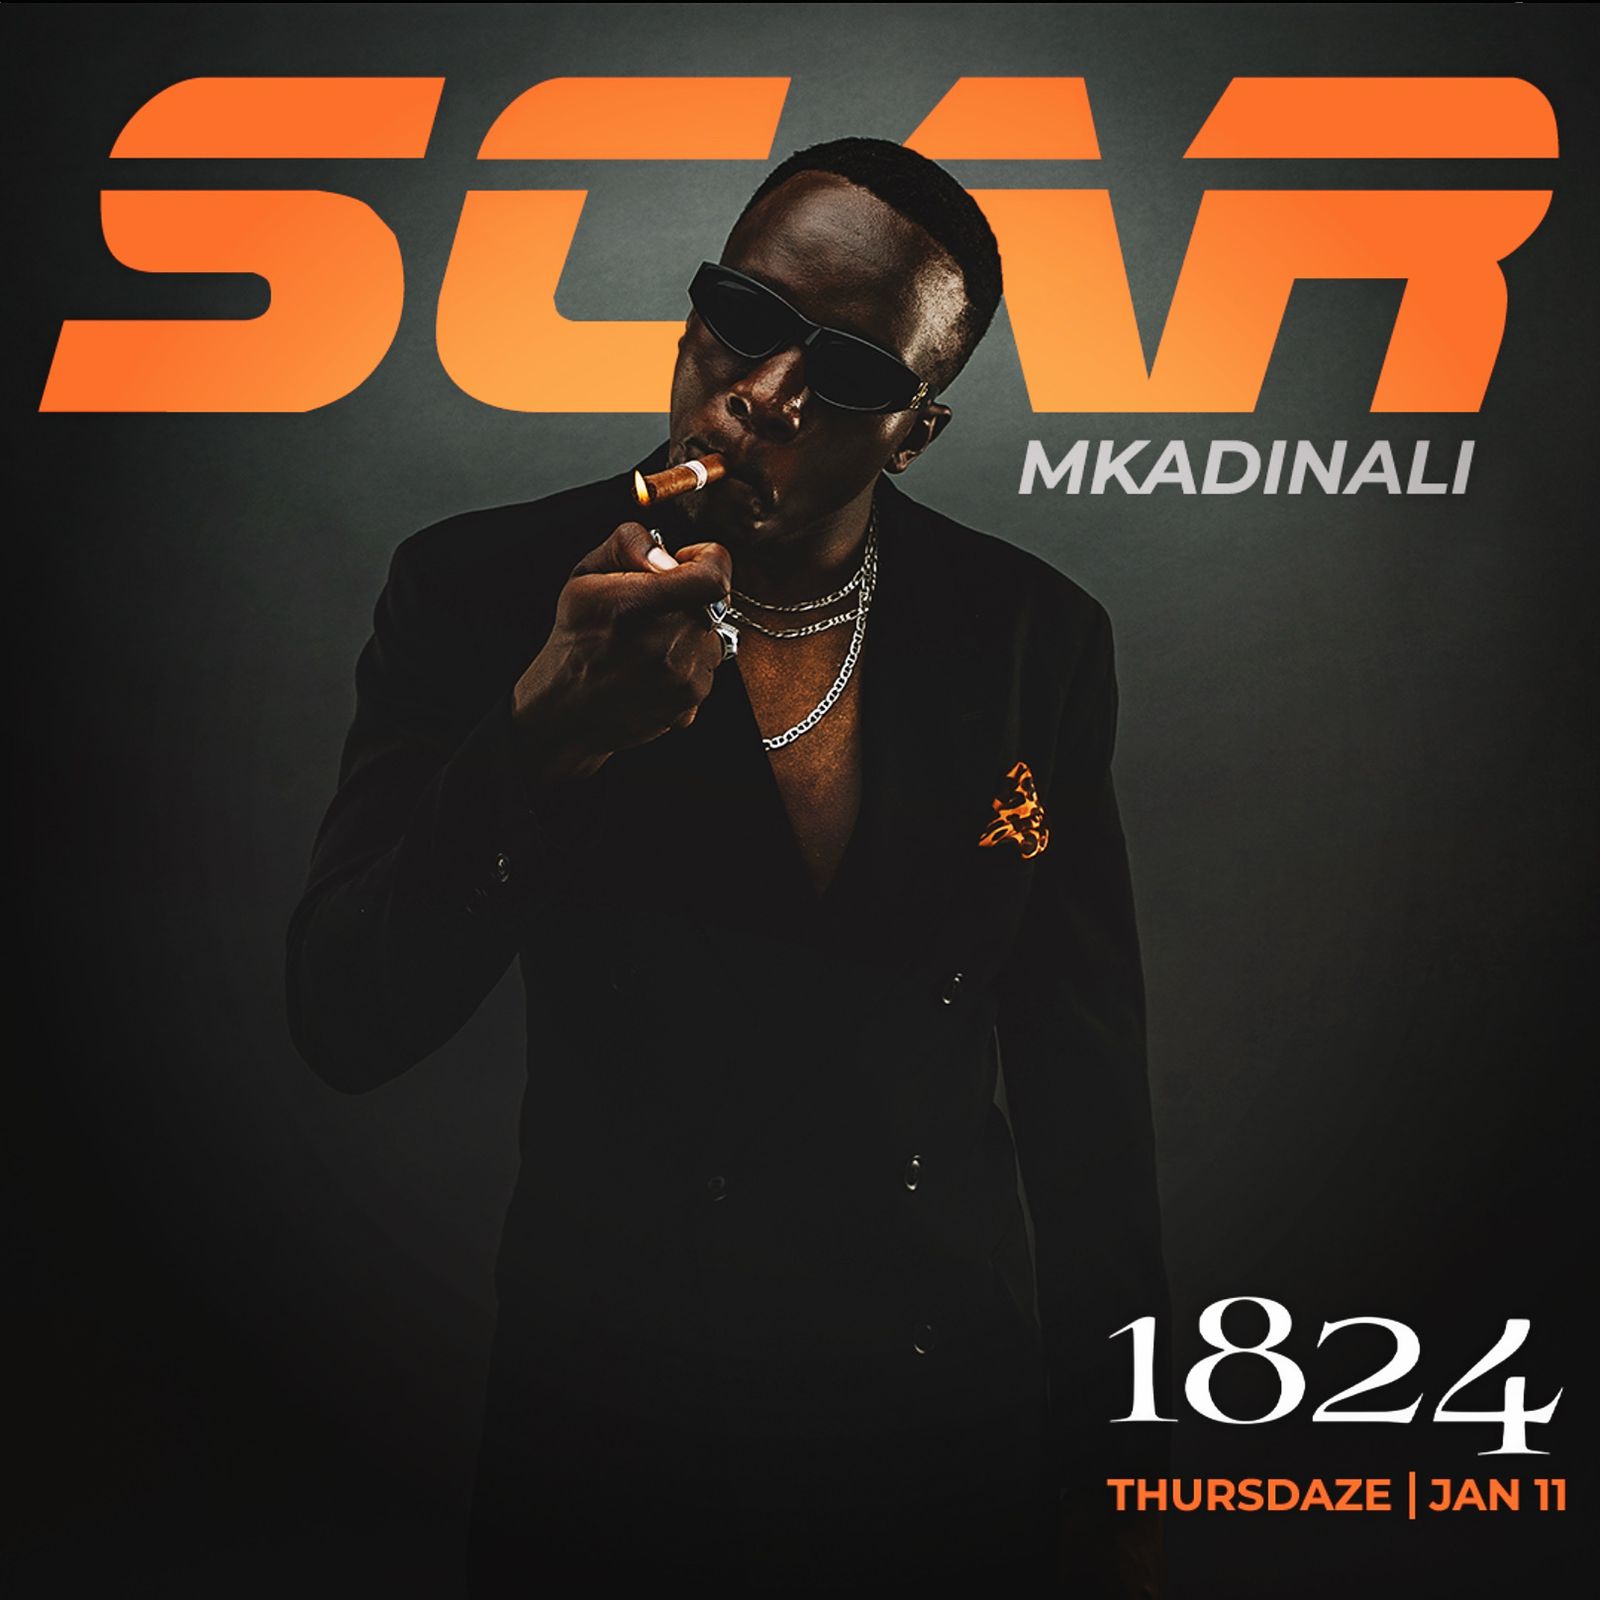 All roads lead to 1824: Scar Mkadinali set for Solo Cameo Performance